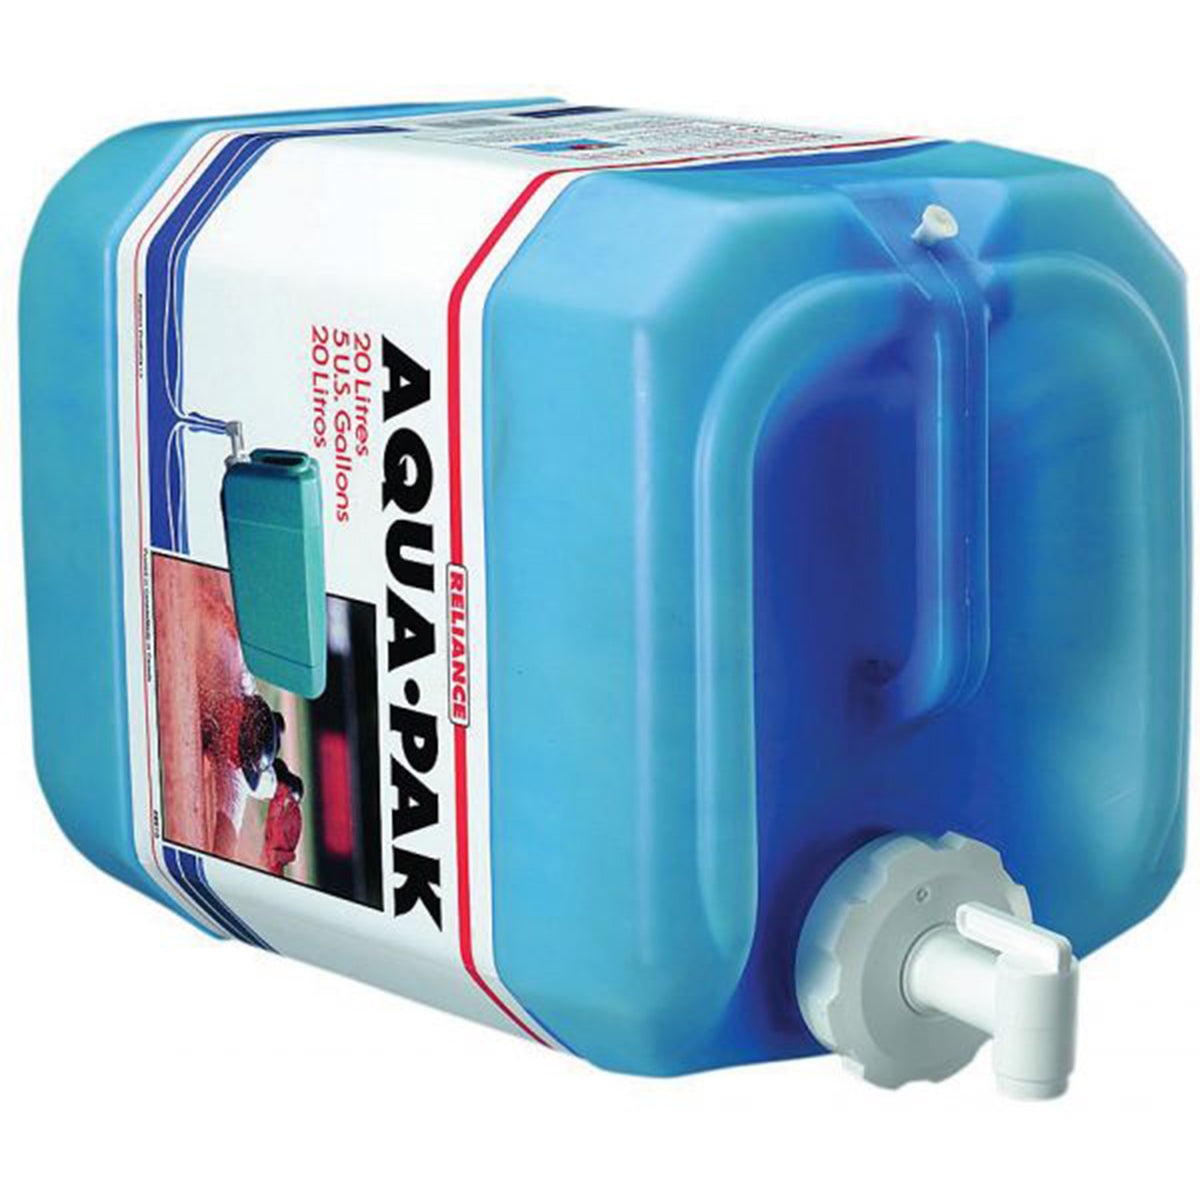 Reliance Aqua Pak 5 Gallon